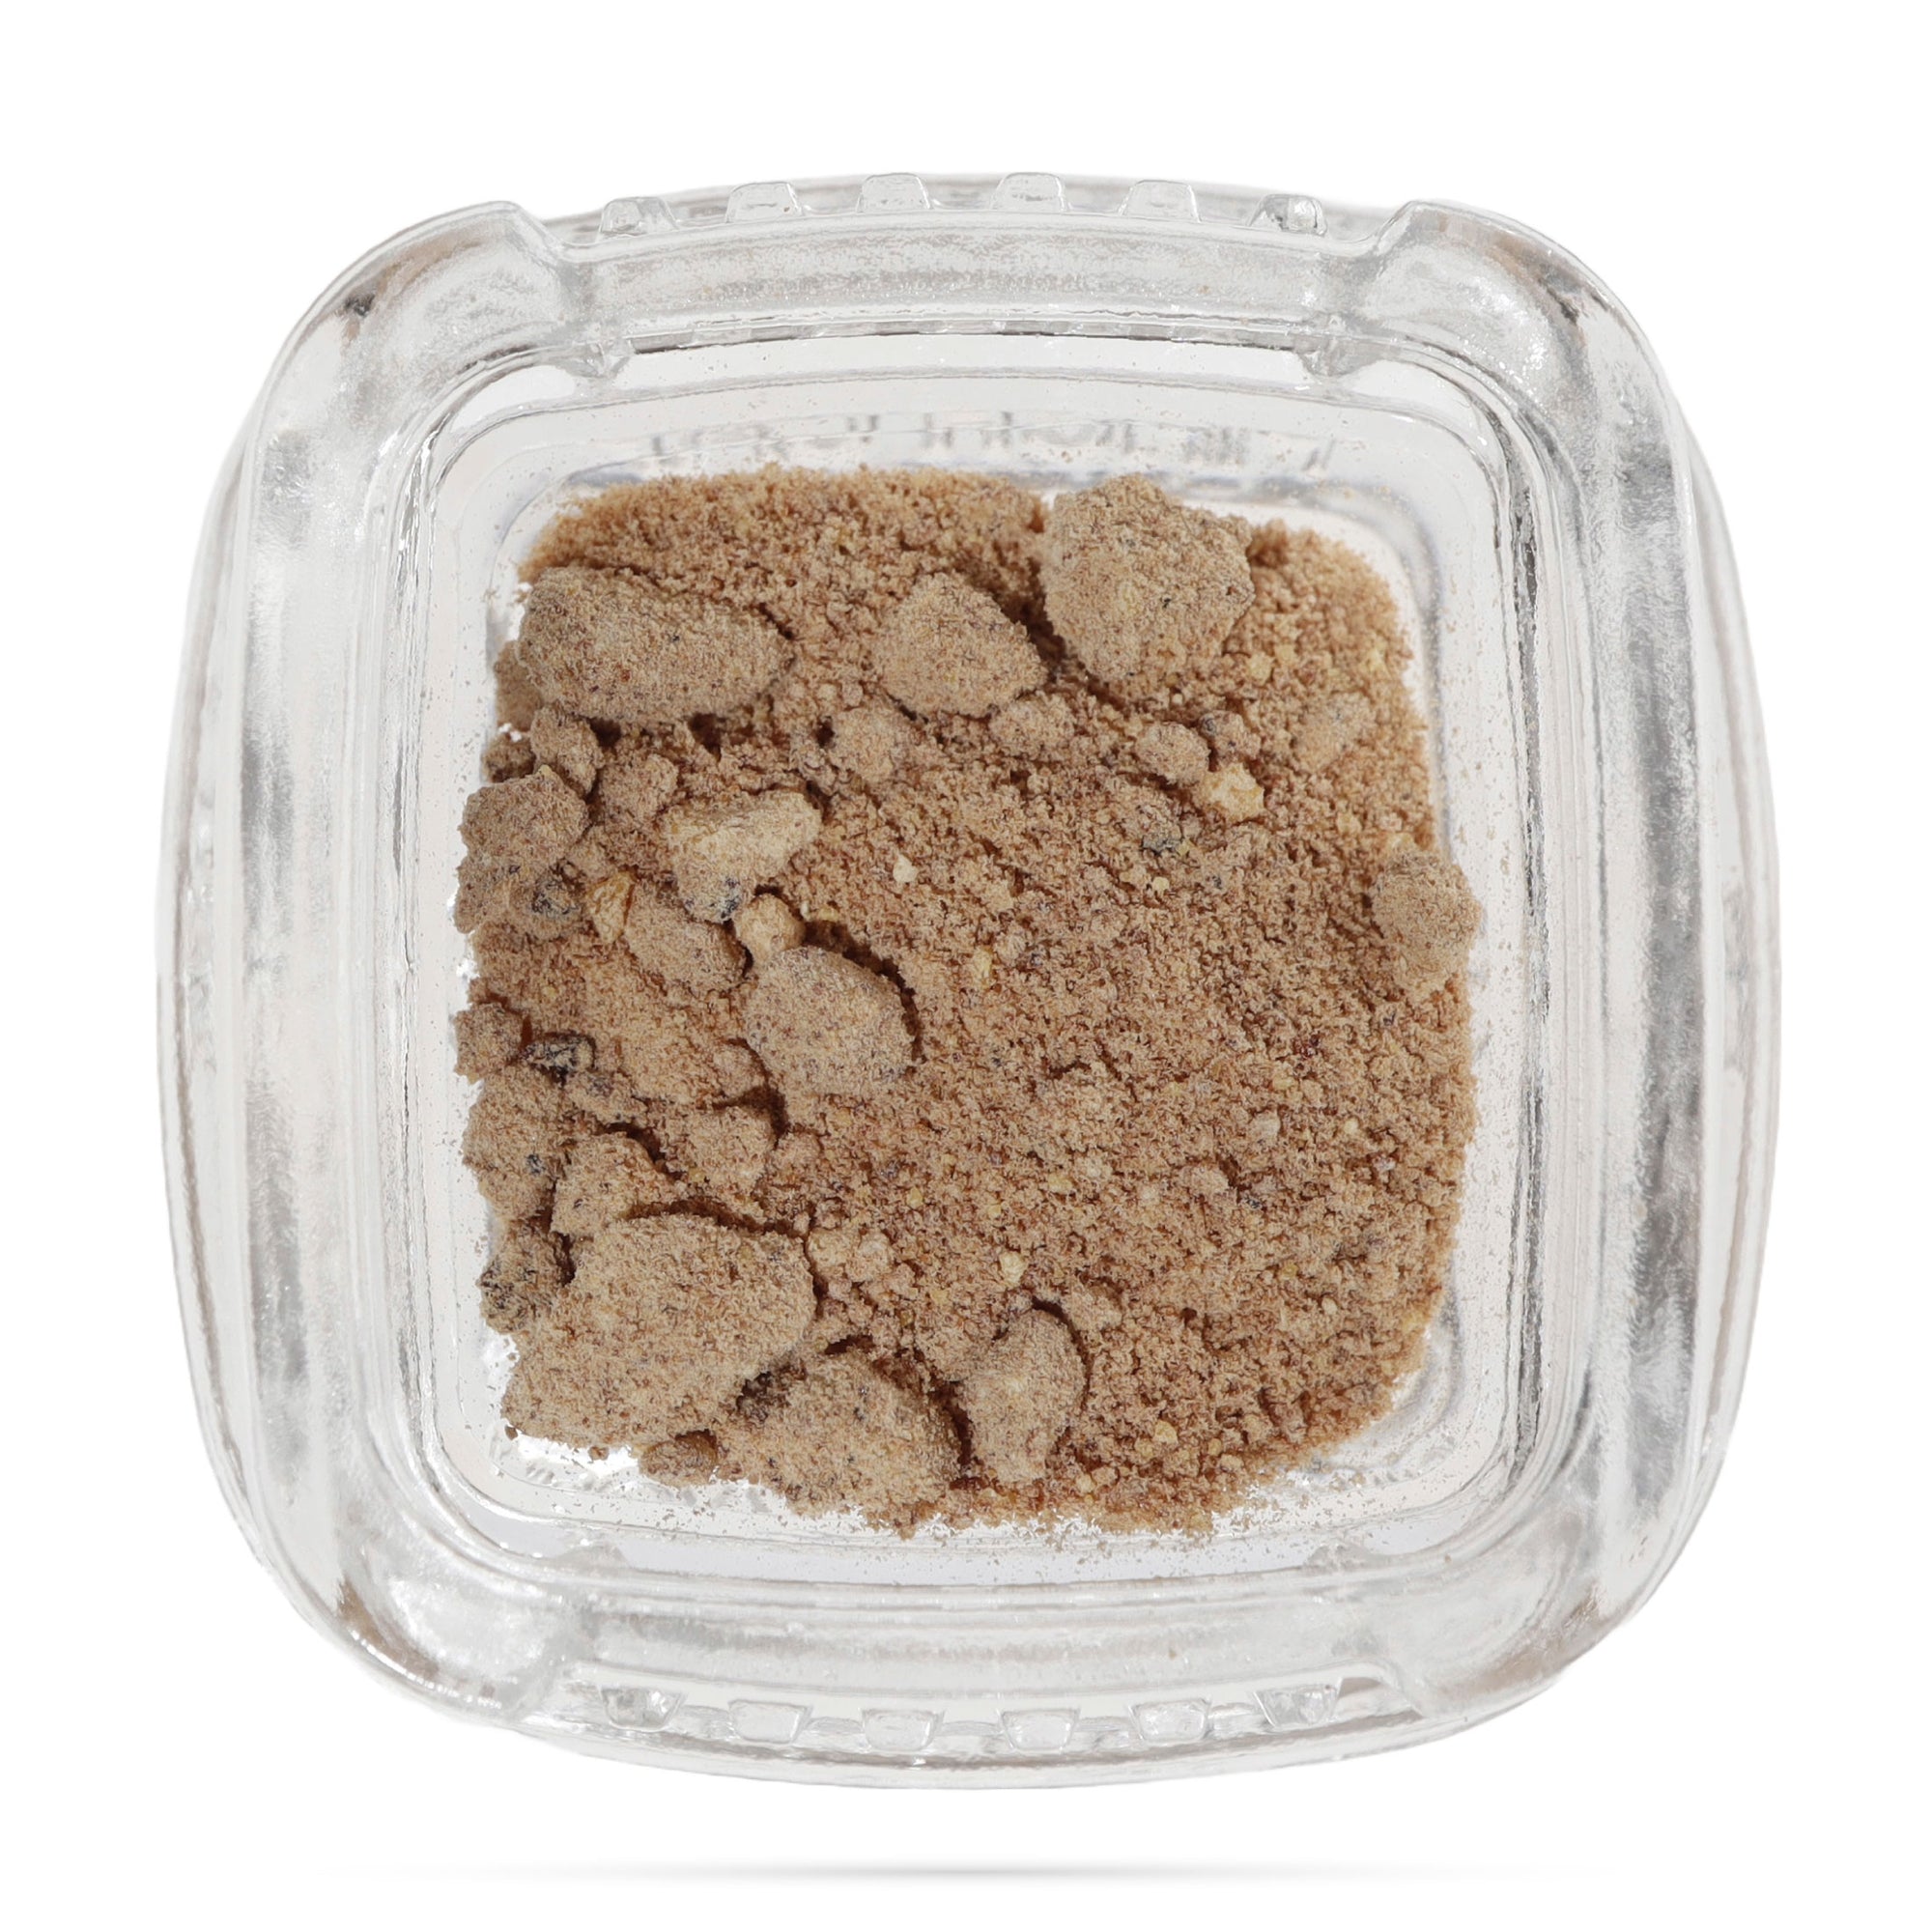 Image of Calyx jar containing 1 gram of CBDa Isolate.